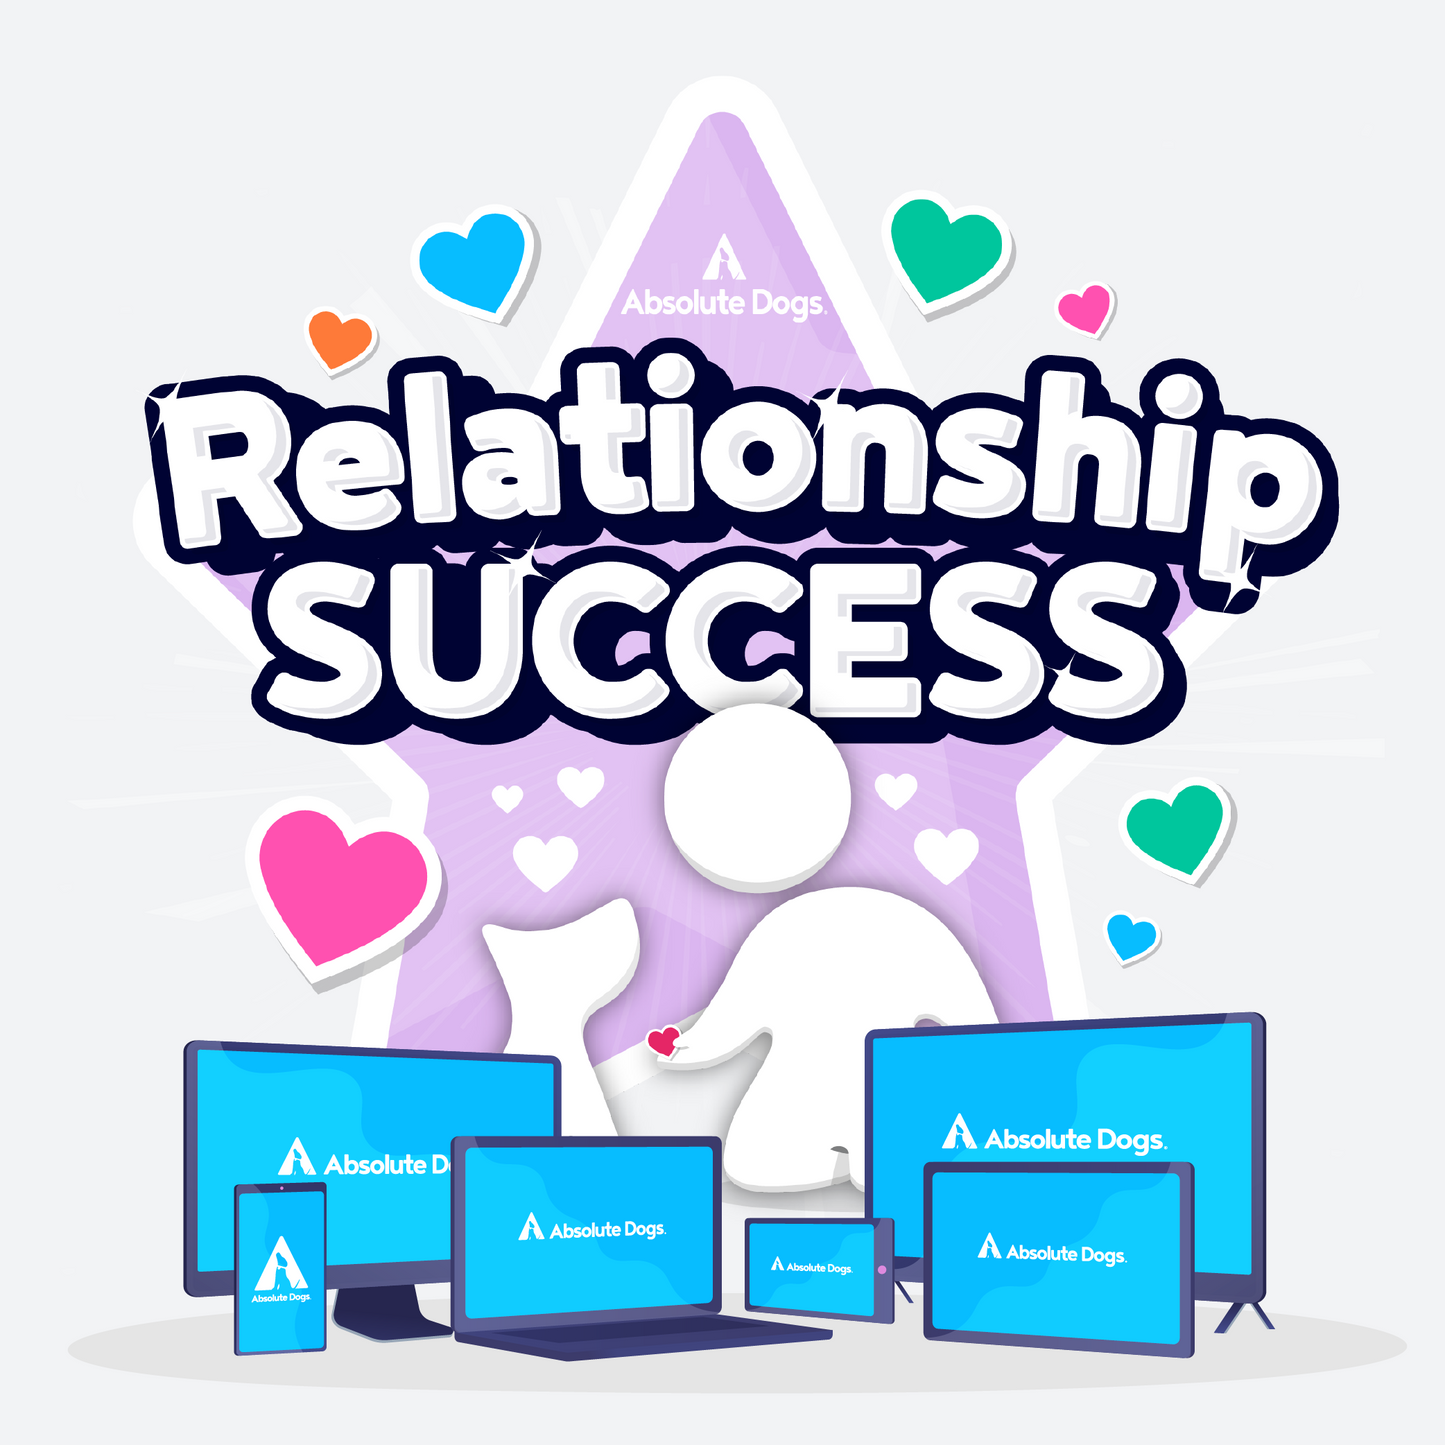 Relationship Success!